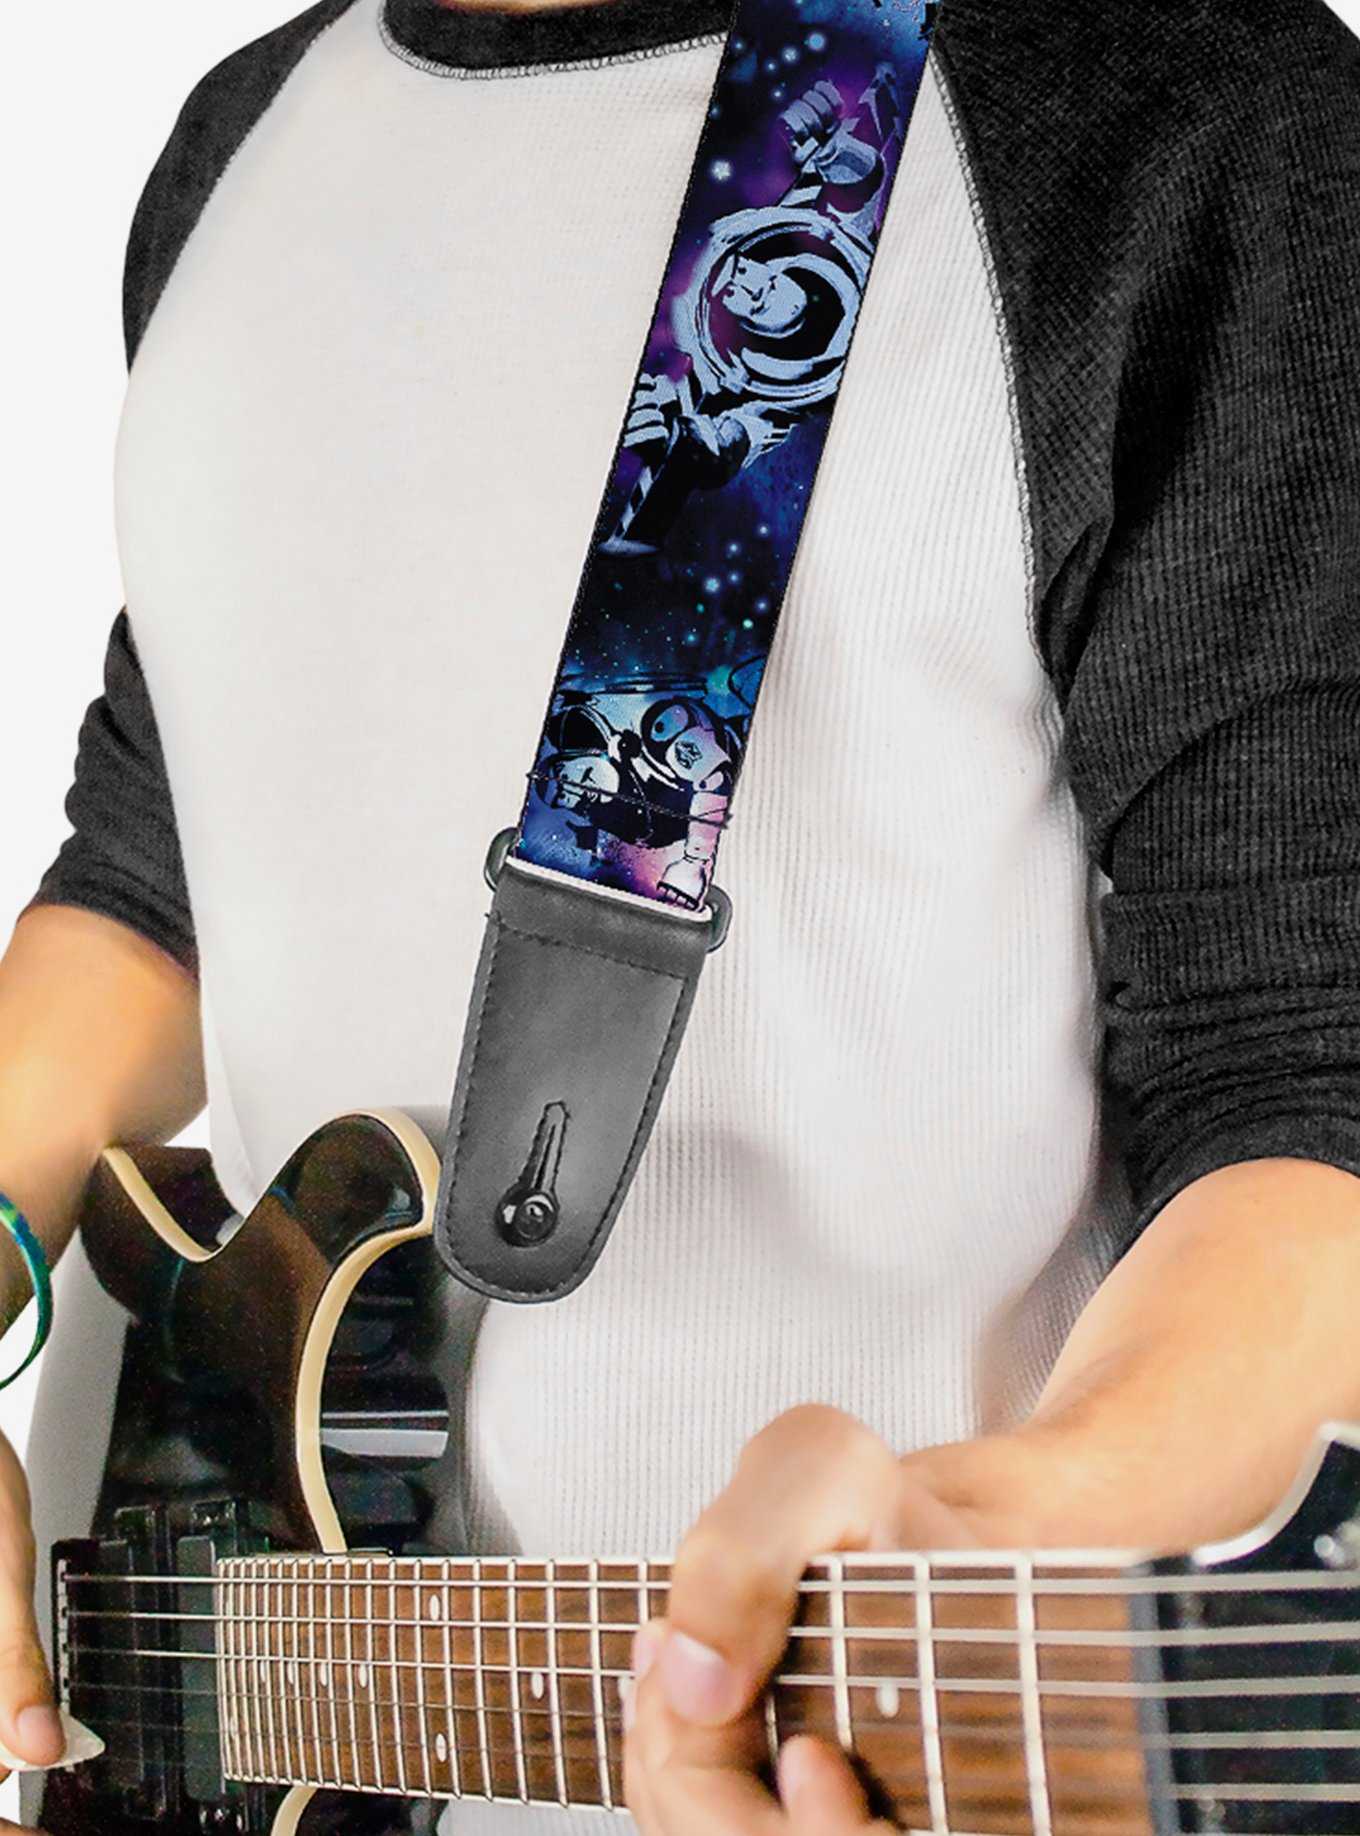 Disney Pixar Buzz Lightyear Poses Galaxy Blues Guitar Strap, , hi-res